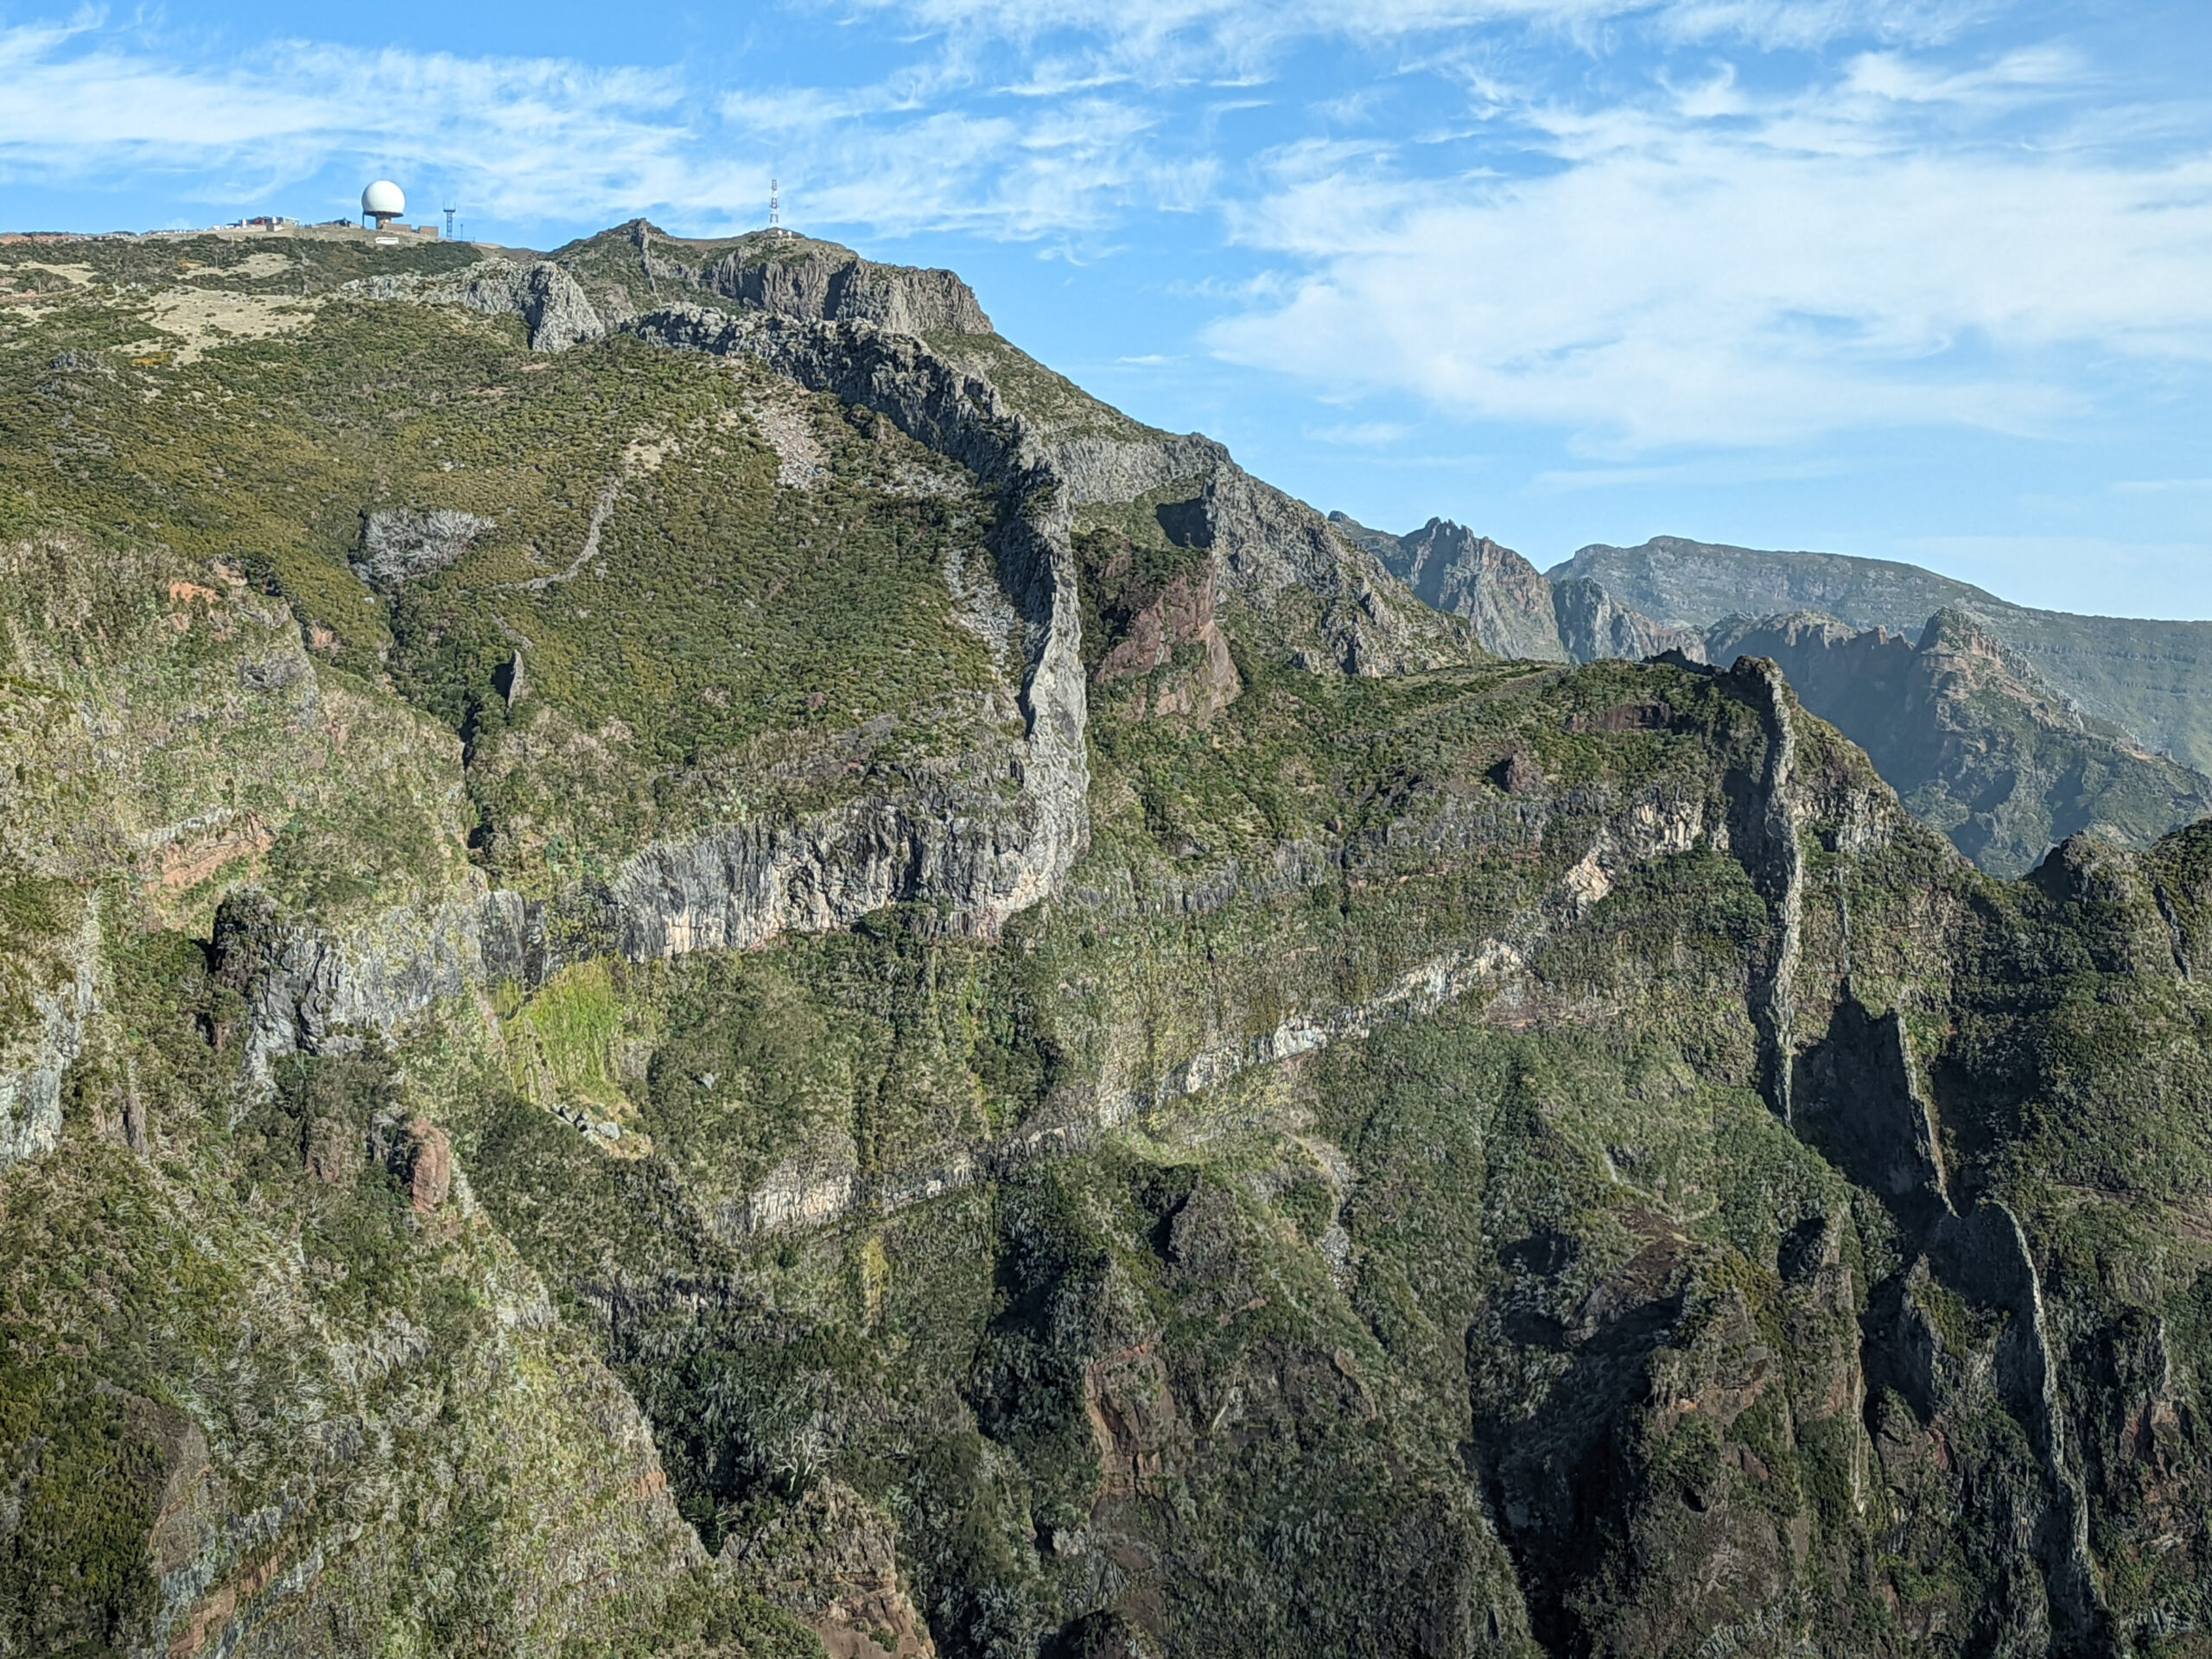 Radar dome on top of Madeira